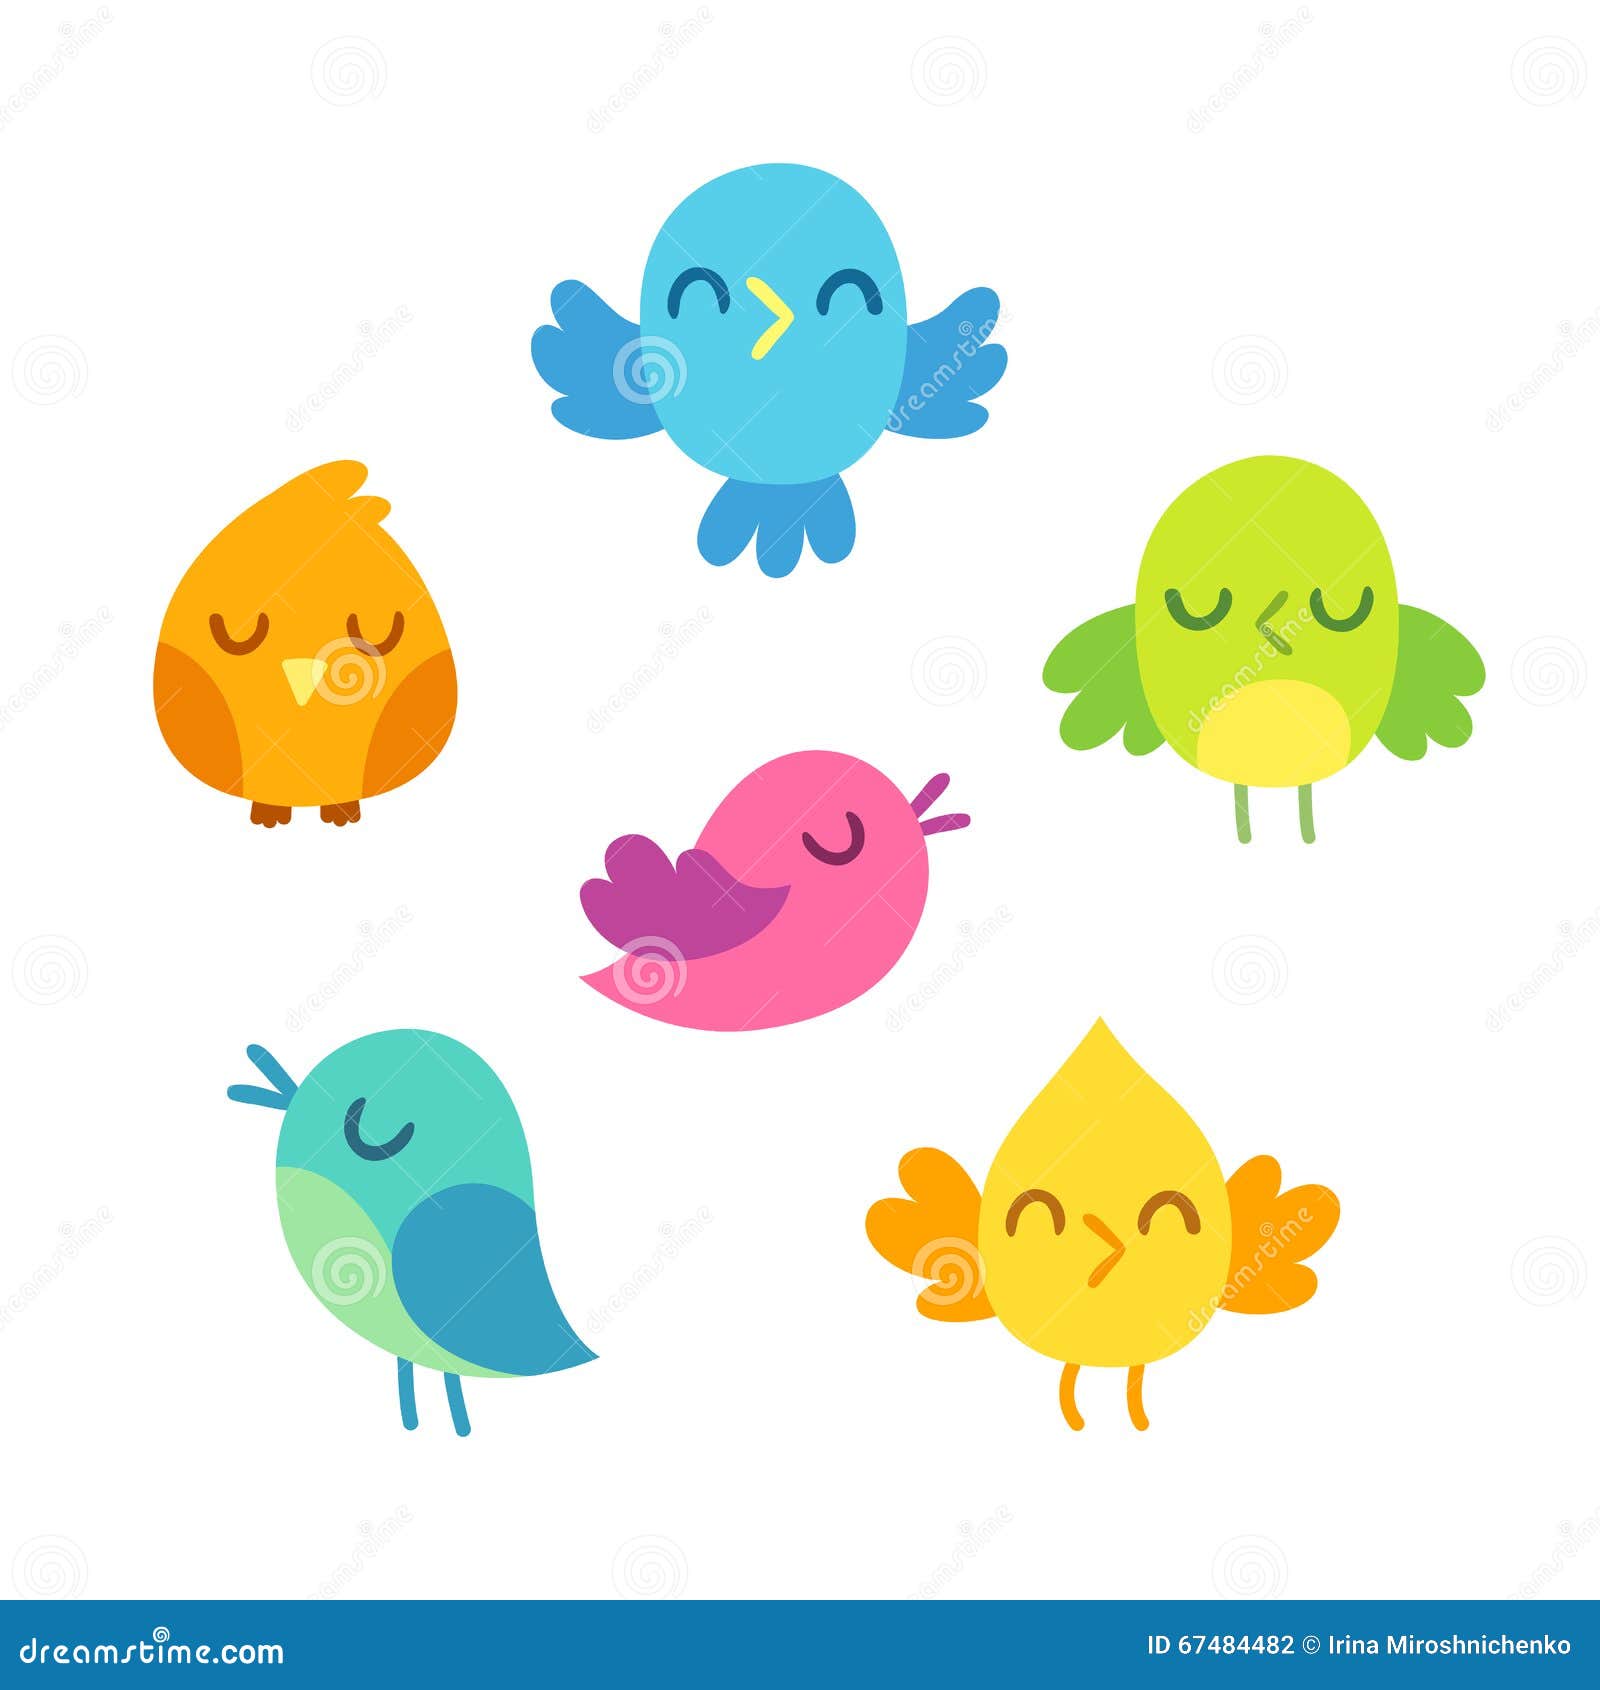 Cute cartoon birds set stock vector. Illustration of graphic - 67484482